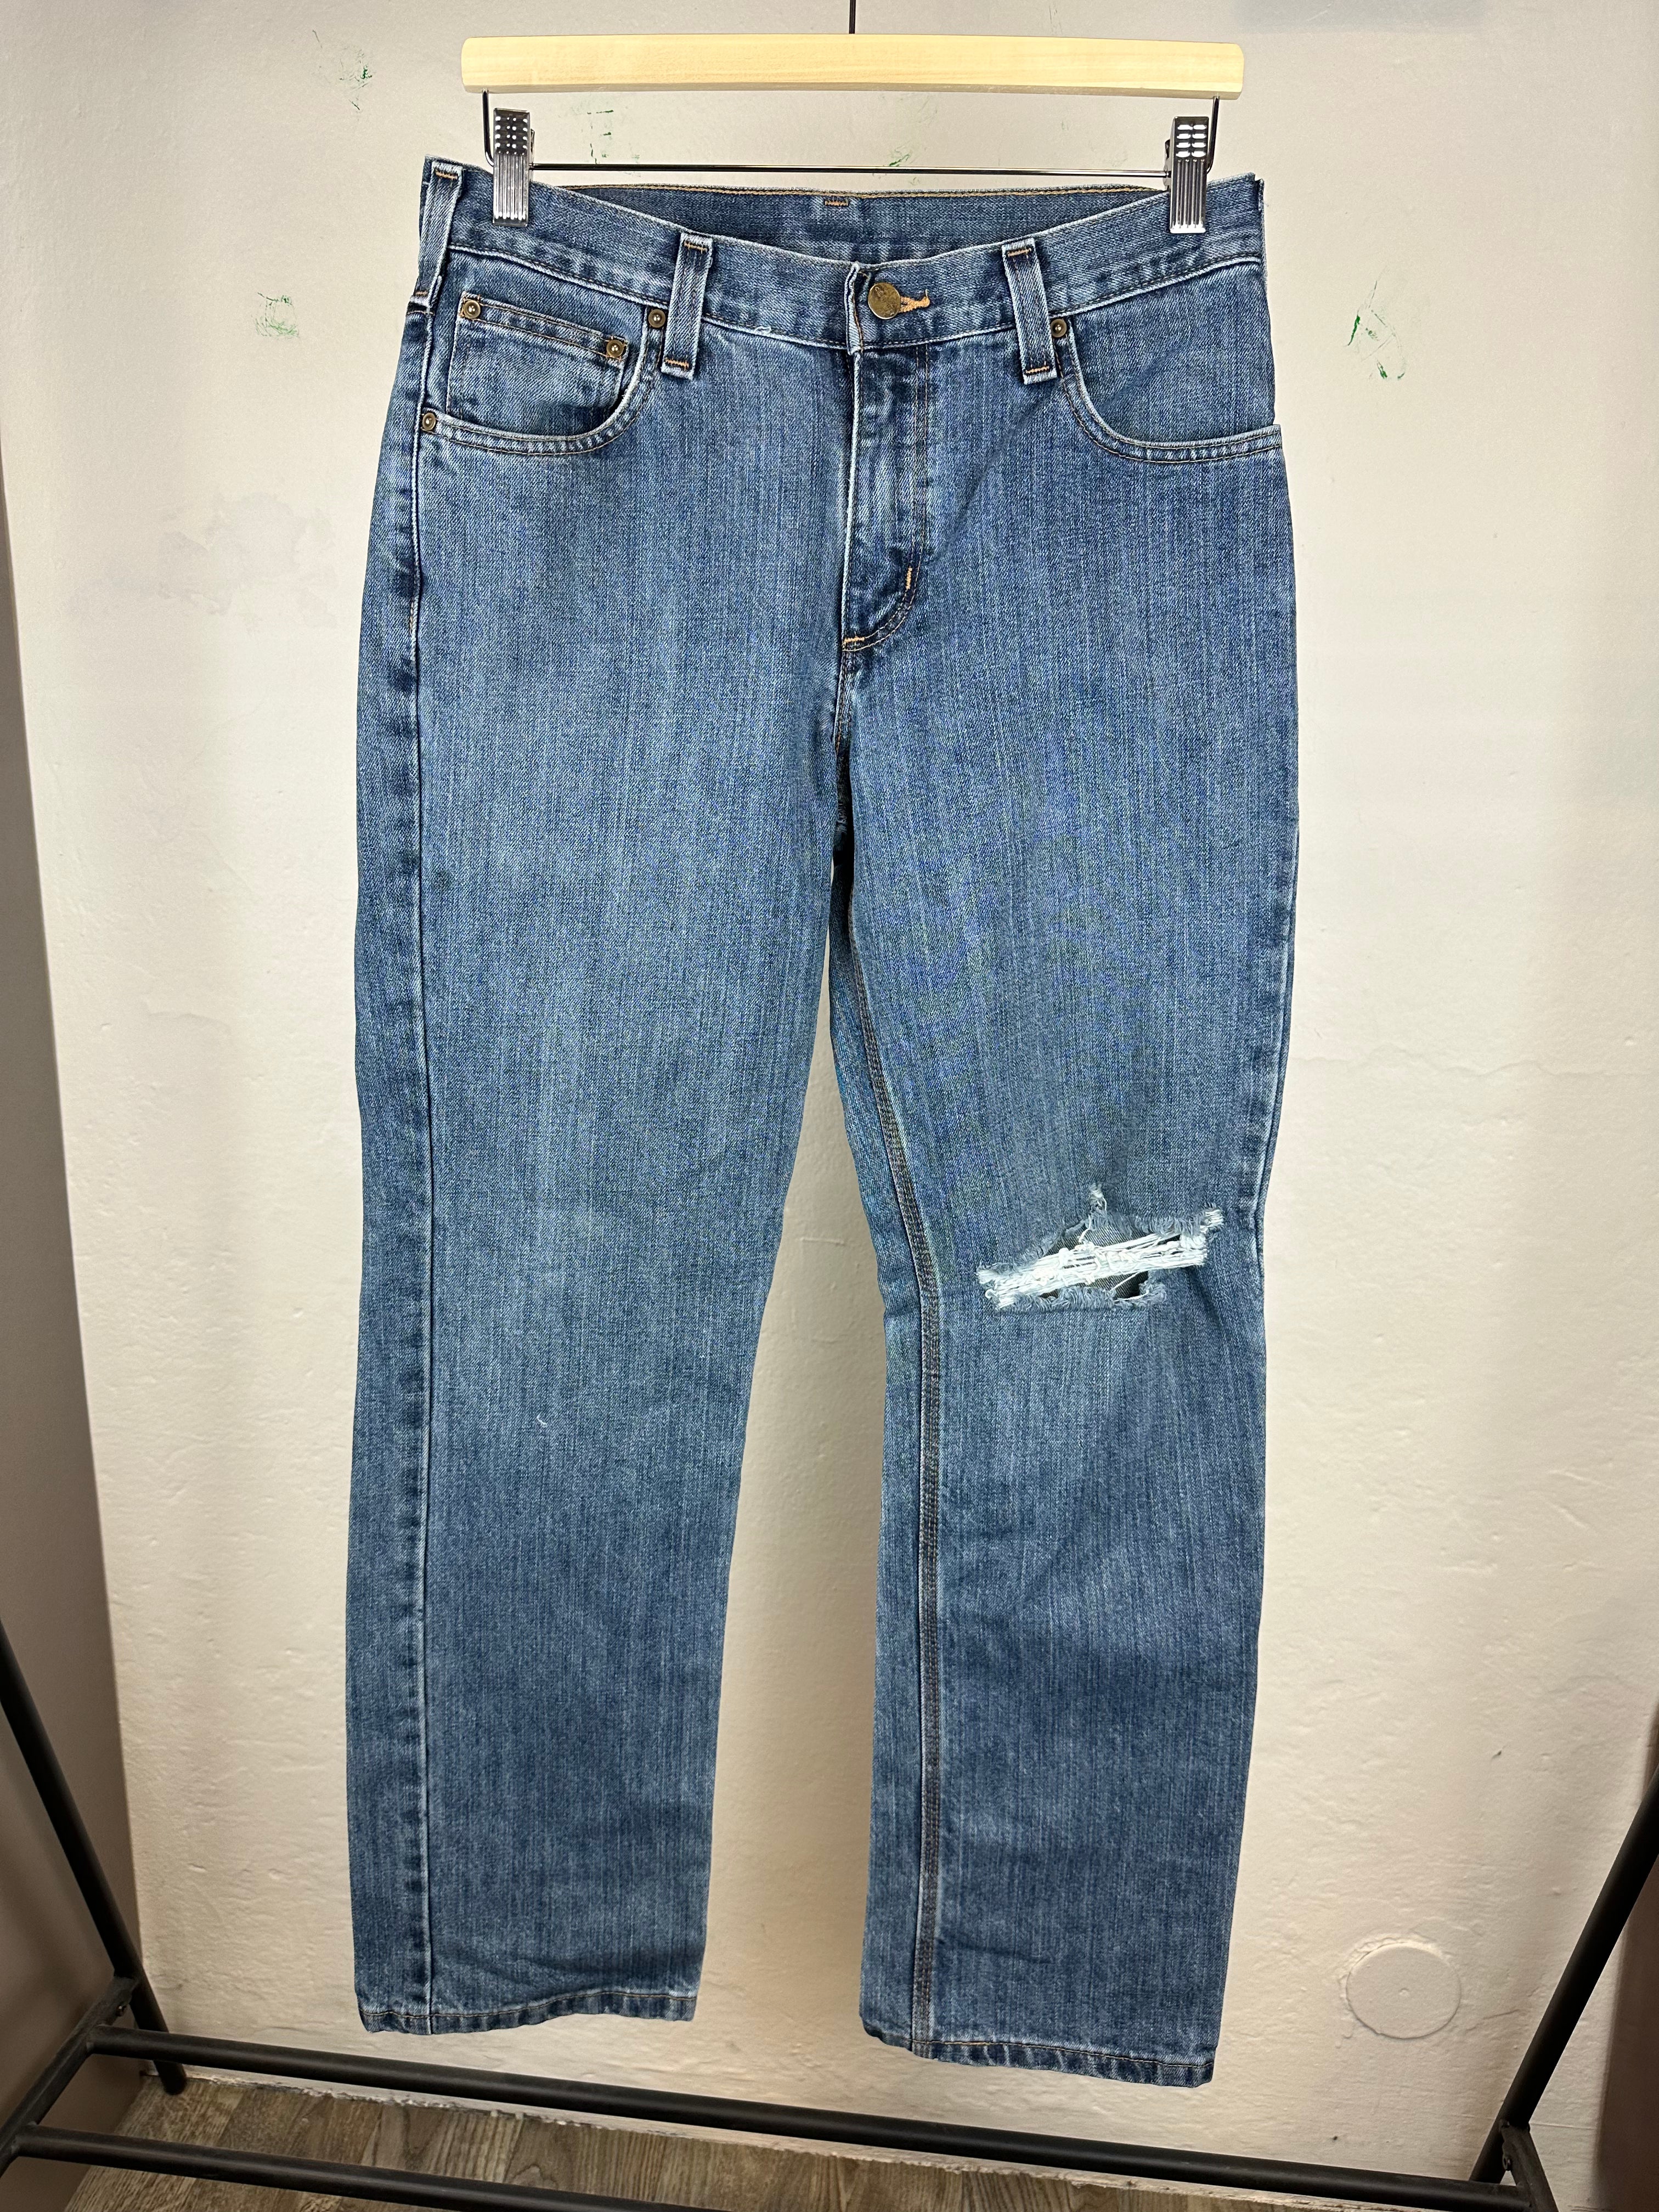 Vintage Carhartt Distressed Pants - size 30x30